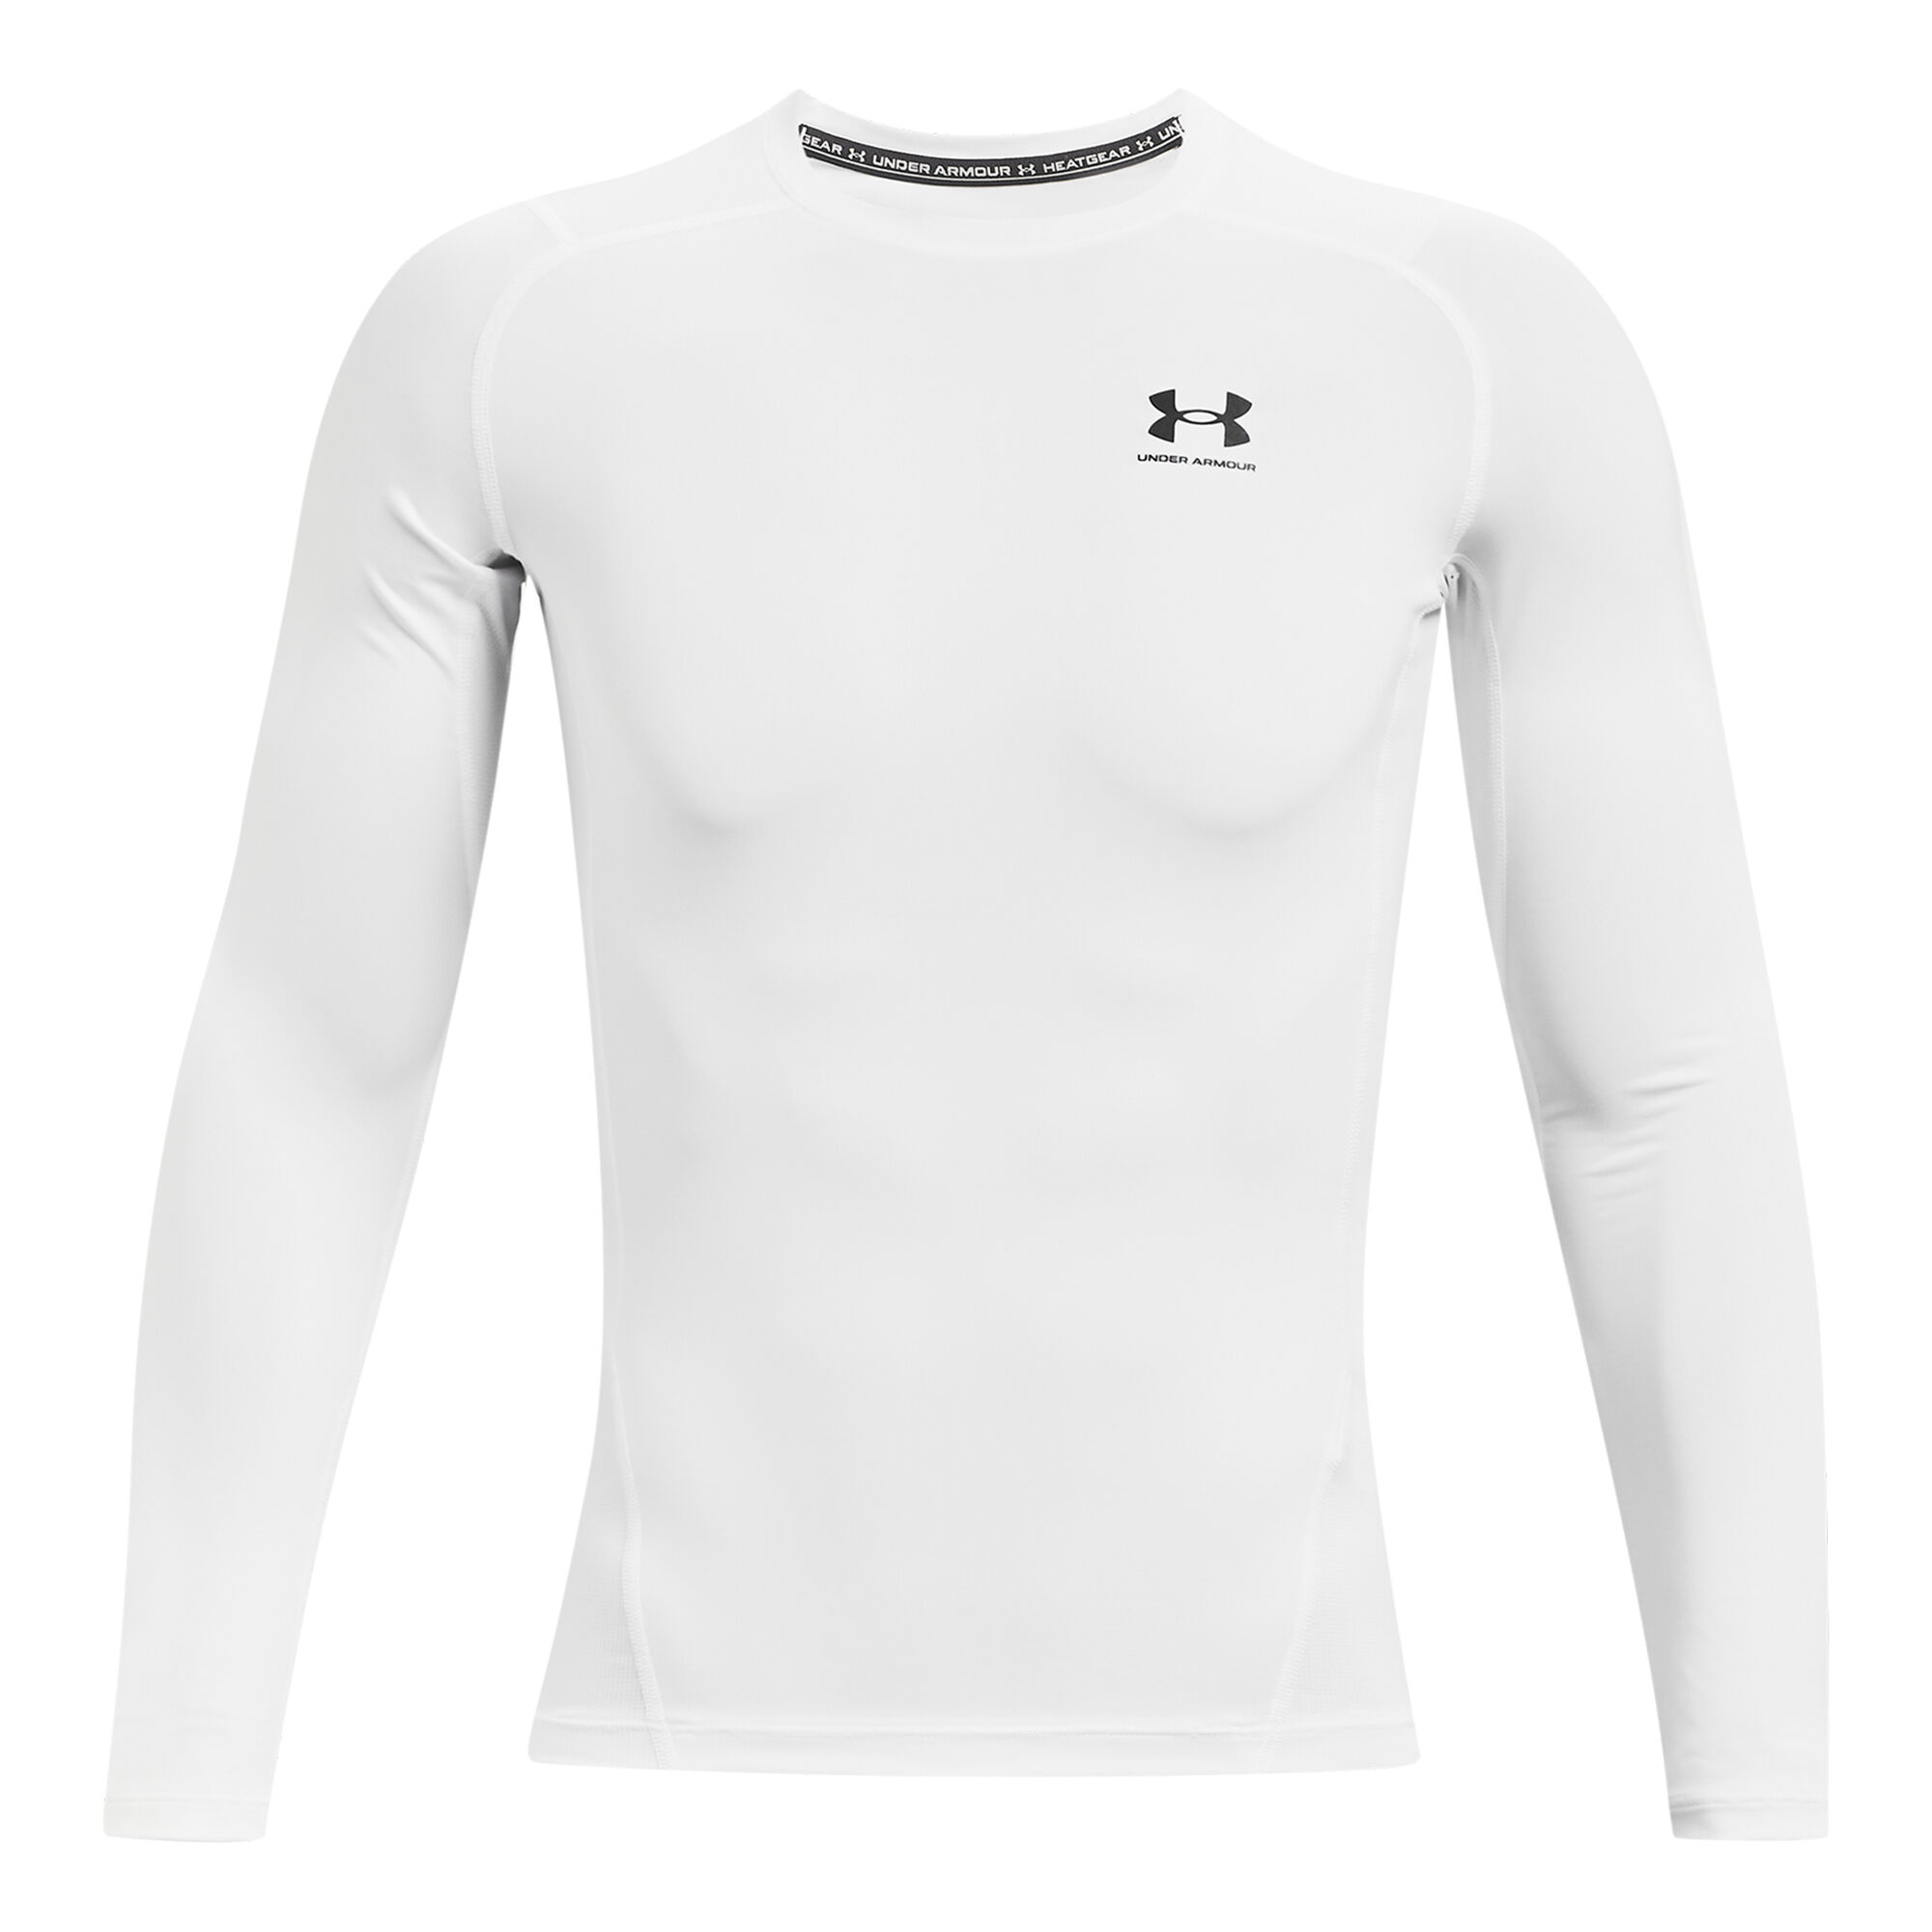 Under Armour HeatGear Compression Men's Tennis Shirt - White